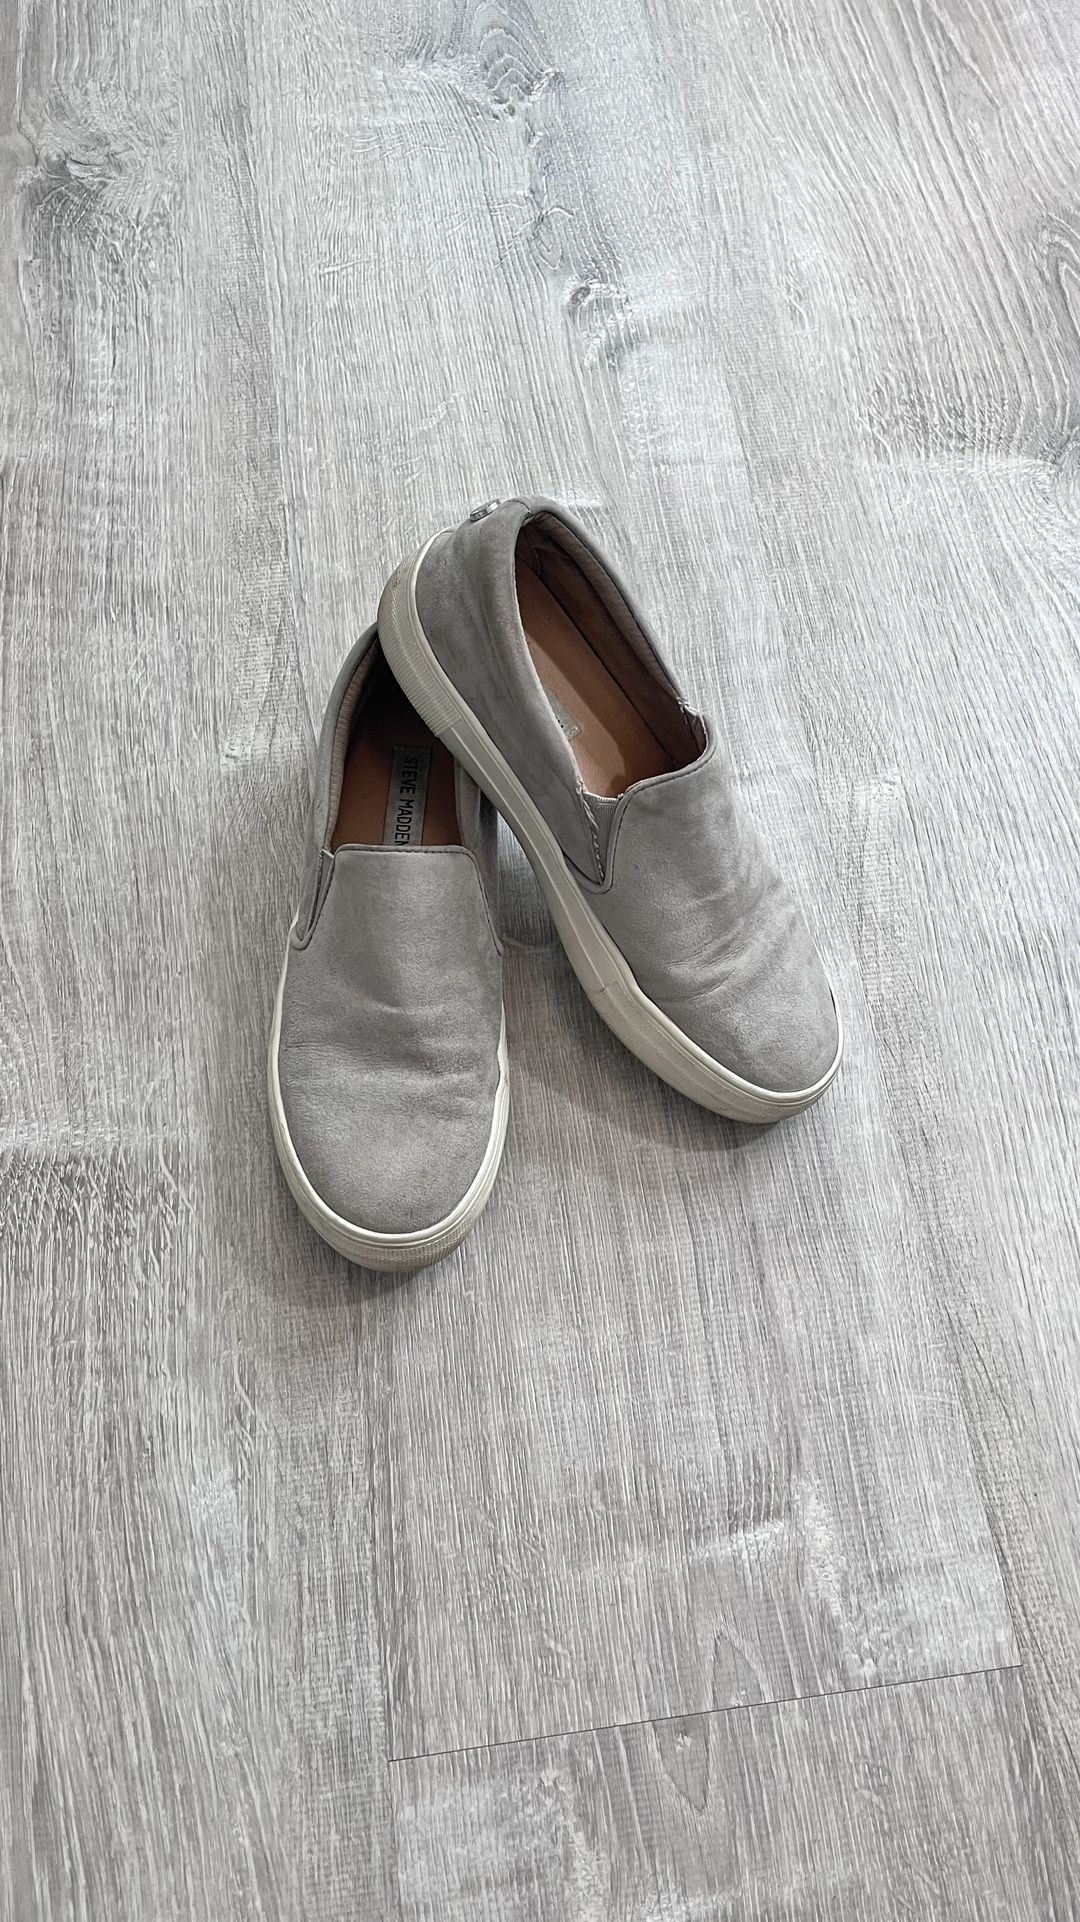 Steve Madden Size 7 Gray White Gills Flat Loafer Slip On Leather Tennis Shoes